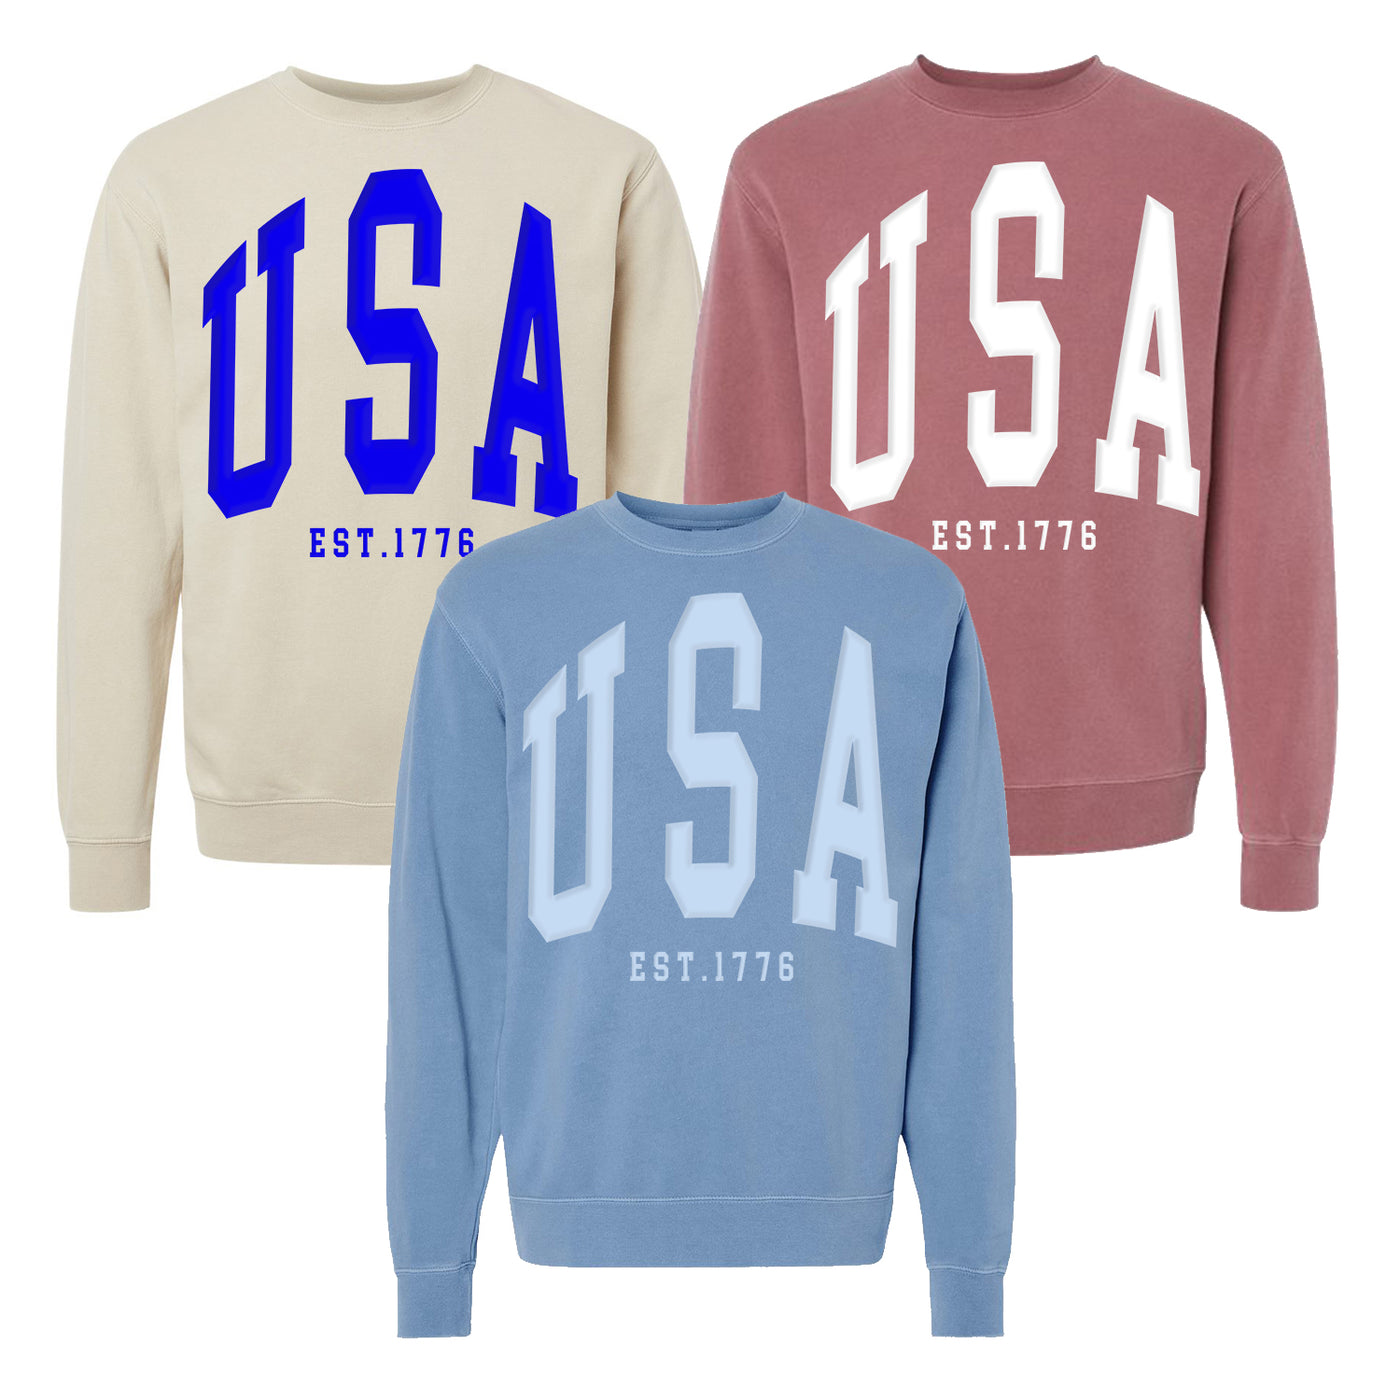 'USA' PUFF Pigment Dyed Crewneck Sweatshirt